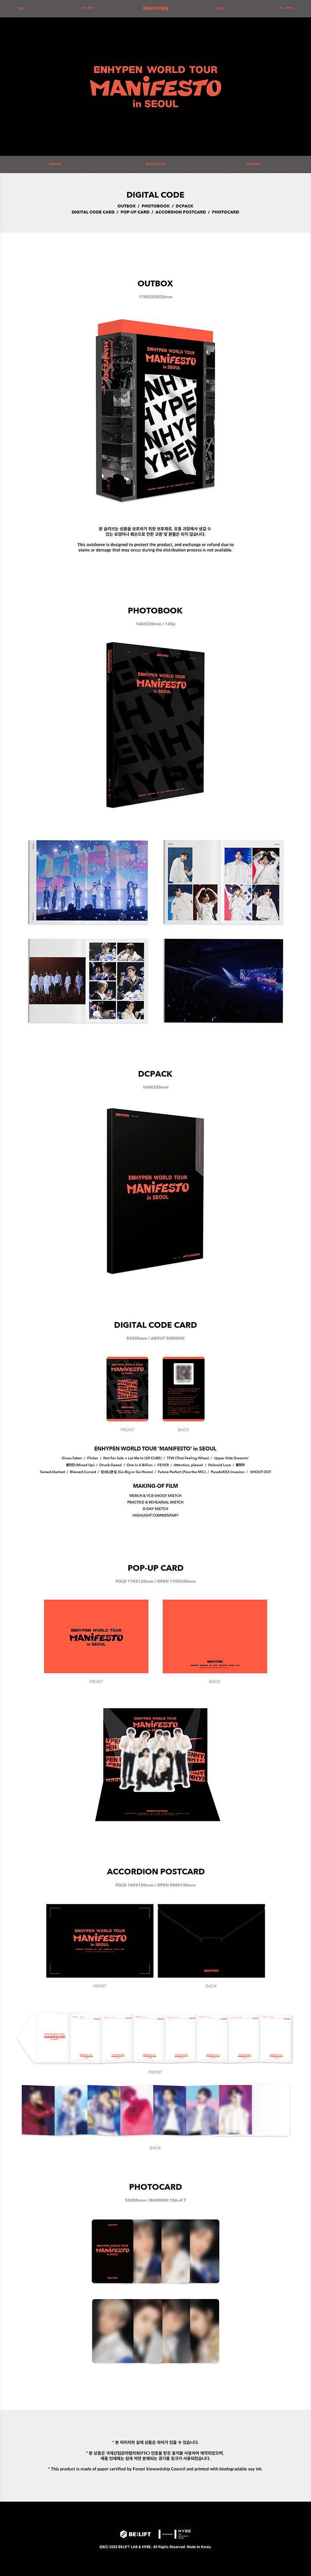 Enhypen World Tour Manifesto in Seoul Digital Code